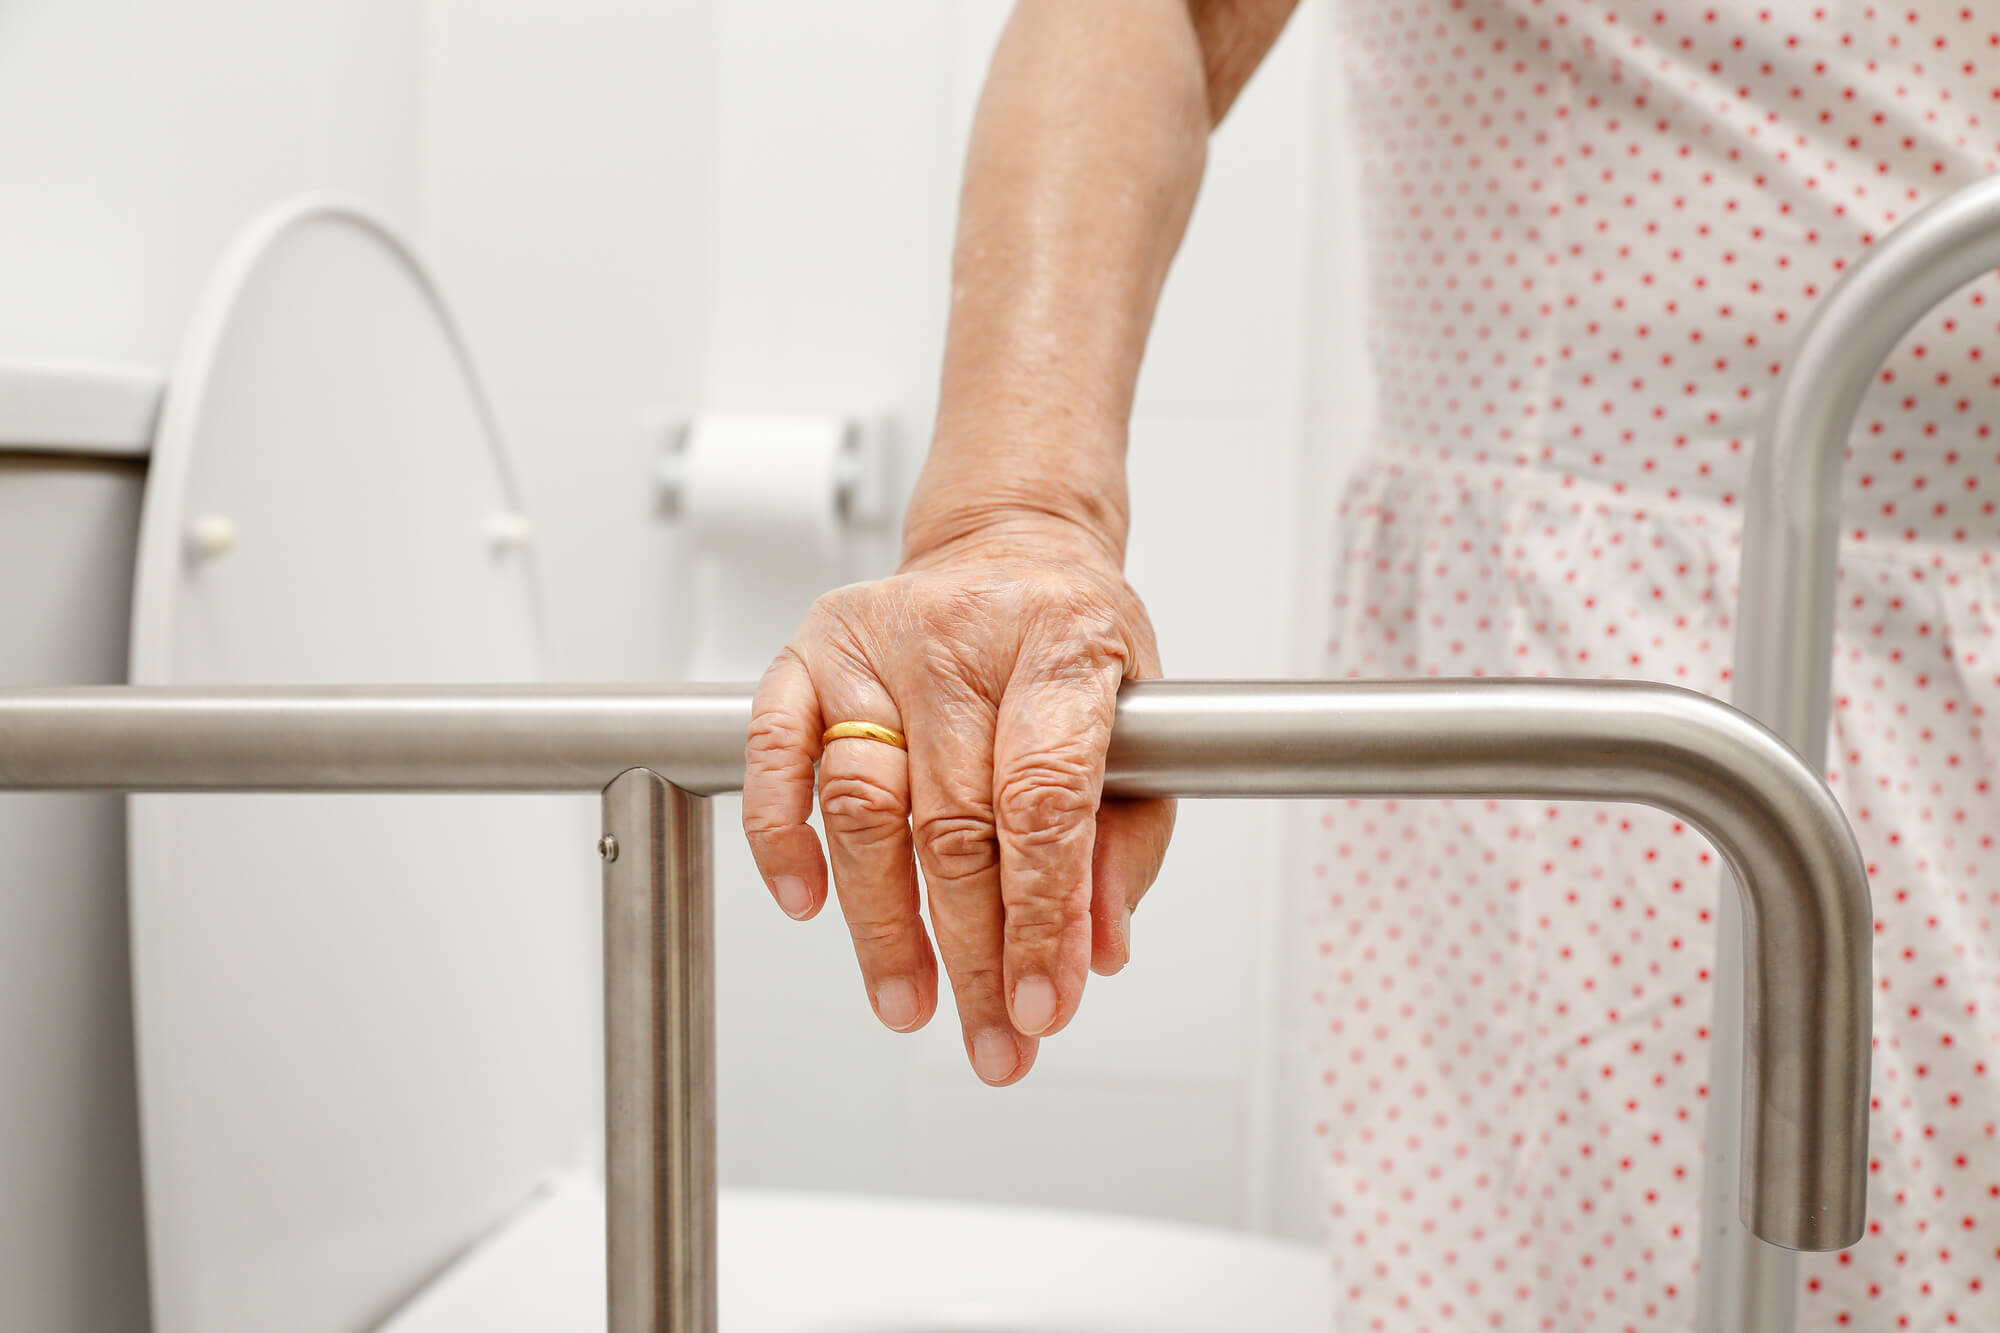 Elderly woman holding on handrail in toilet